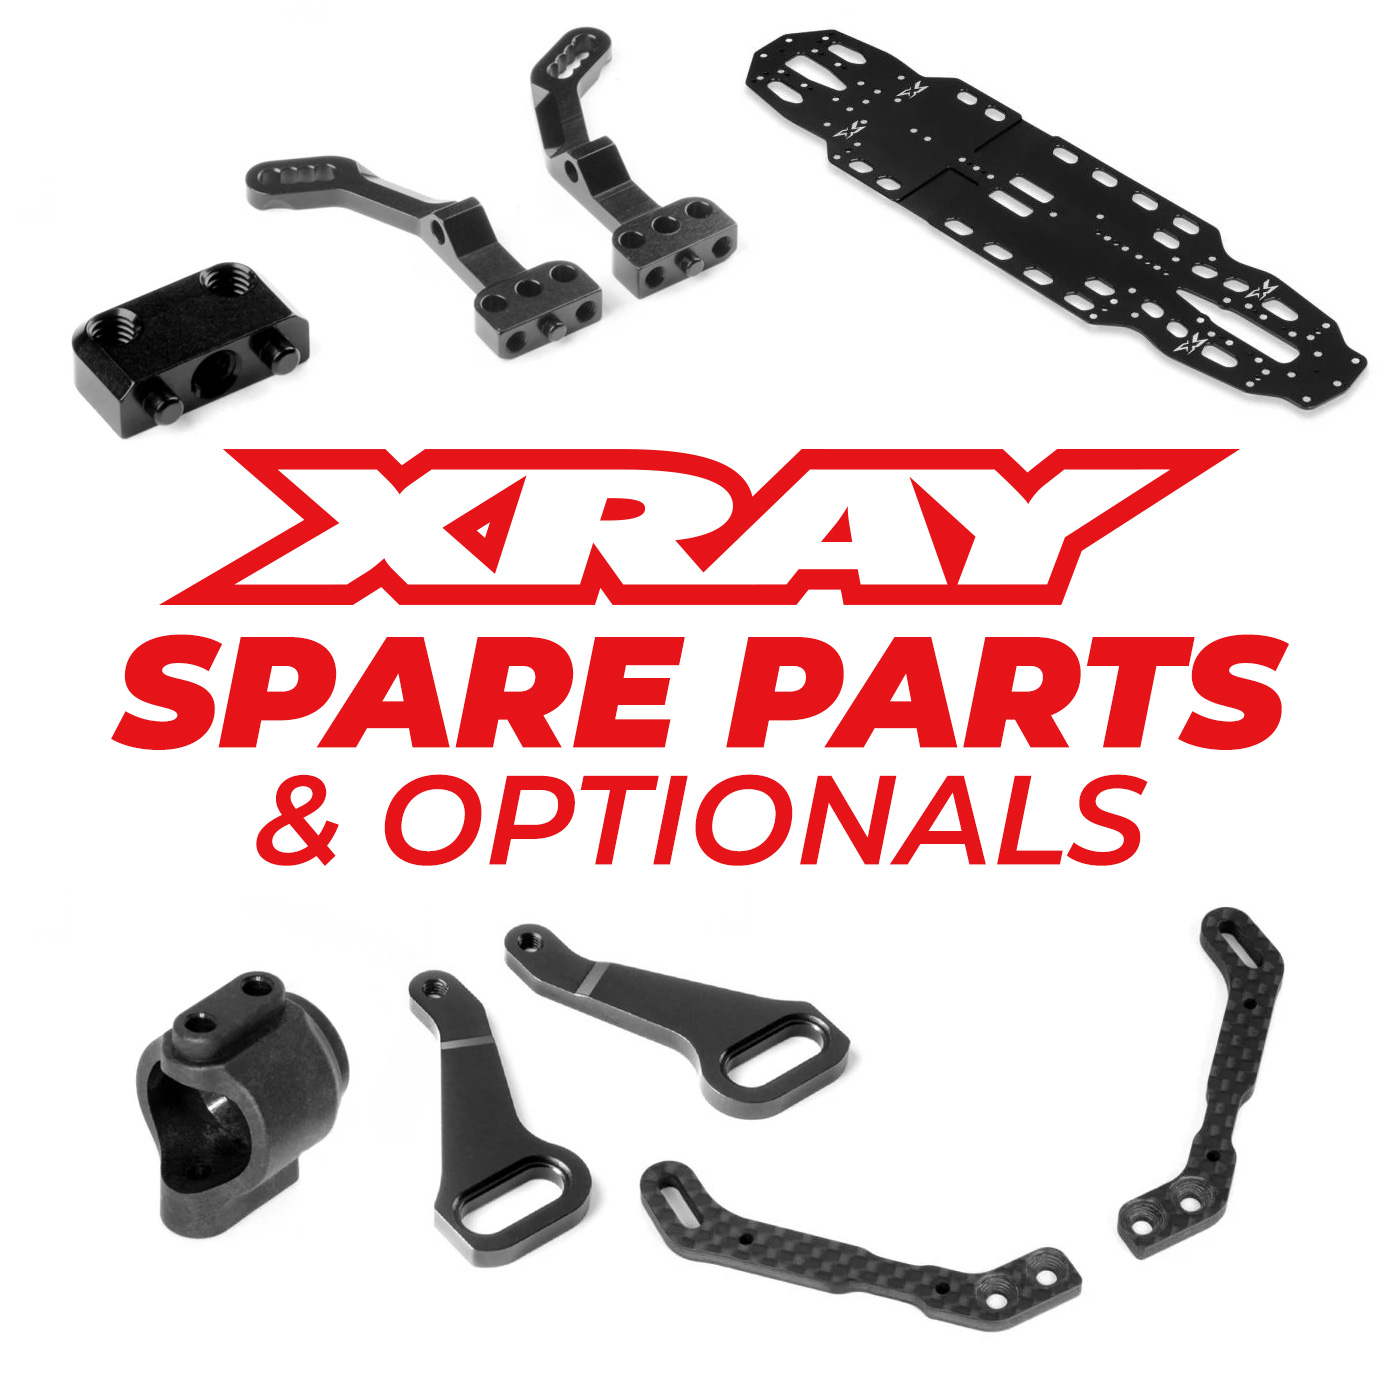 xray x4 spare parts